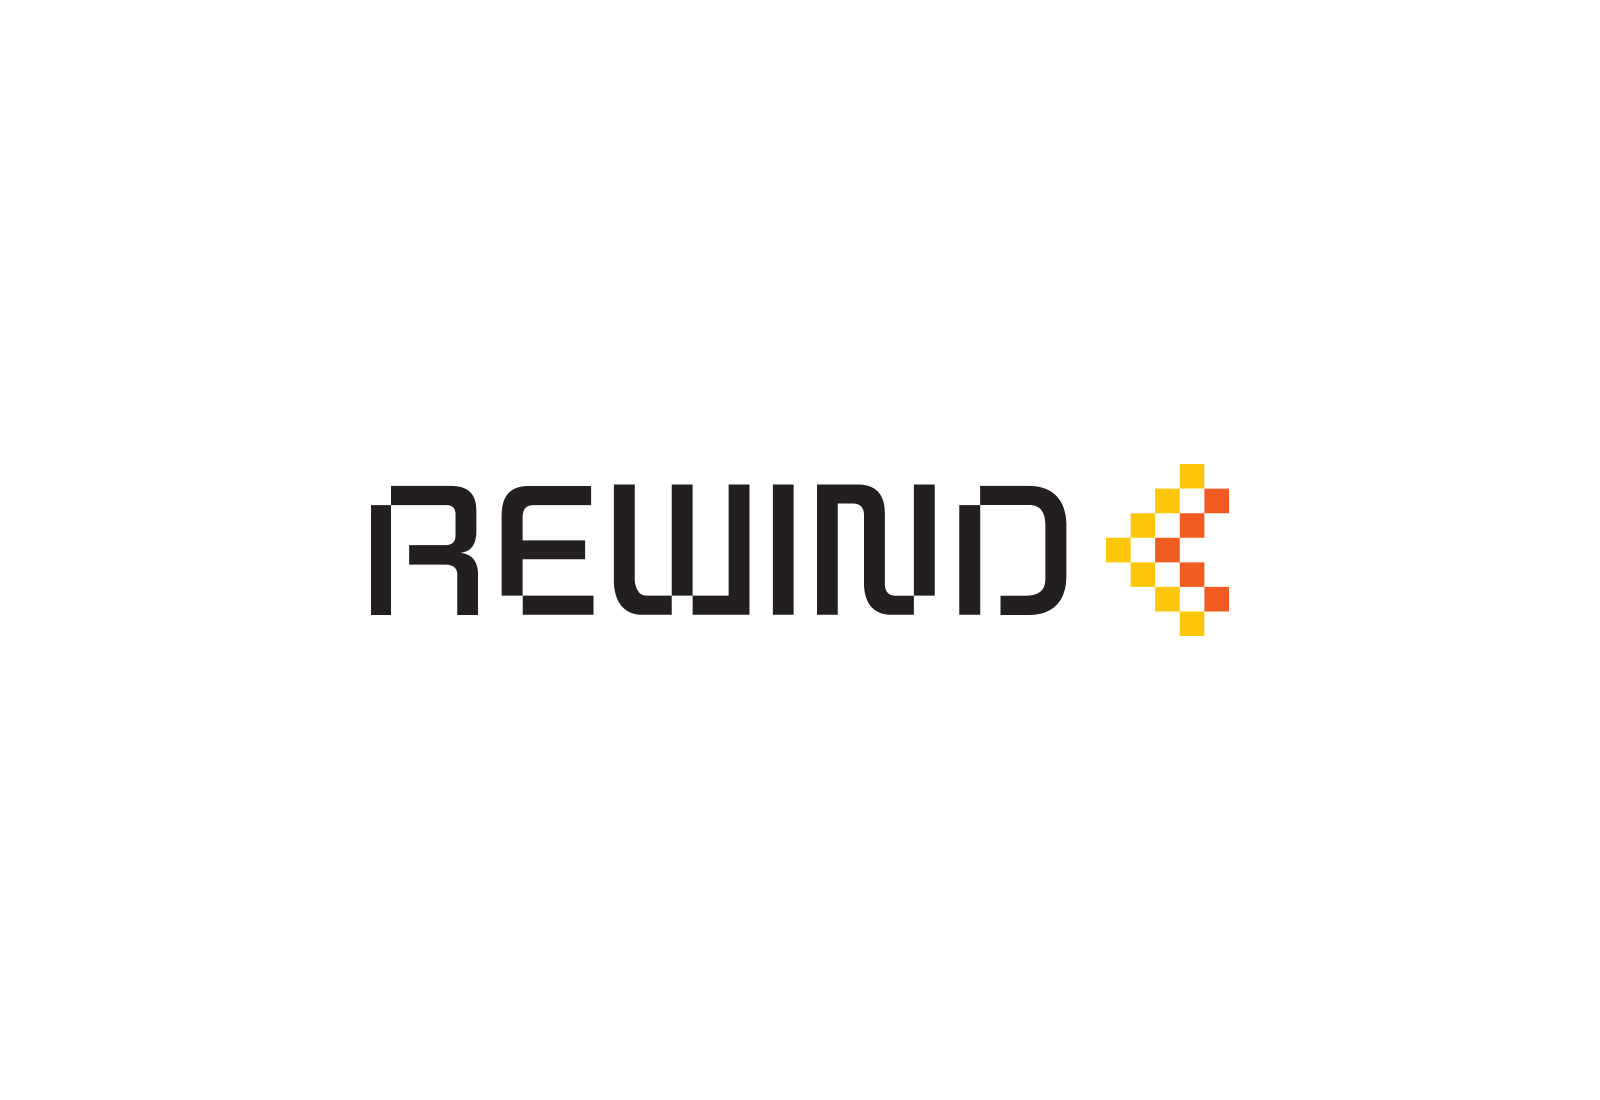 PacMad Logomark | Rewind Retrobar in Knightdale, NC